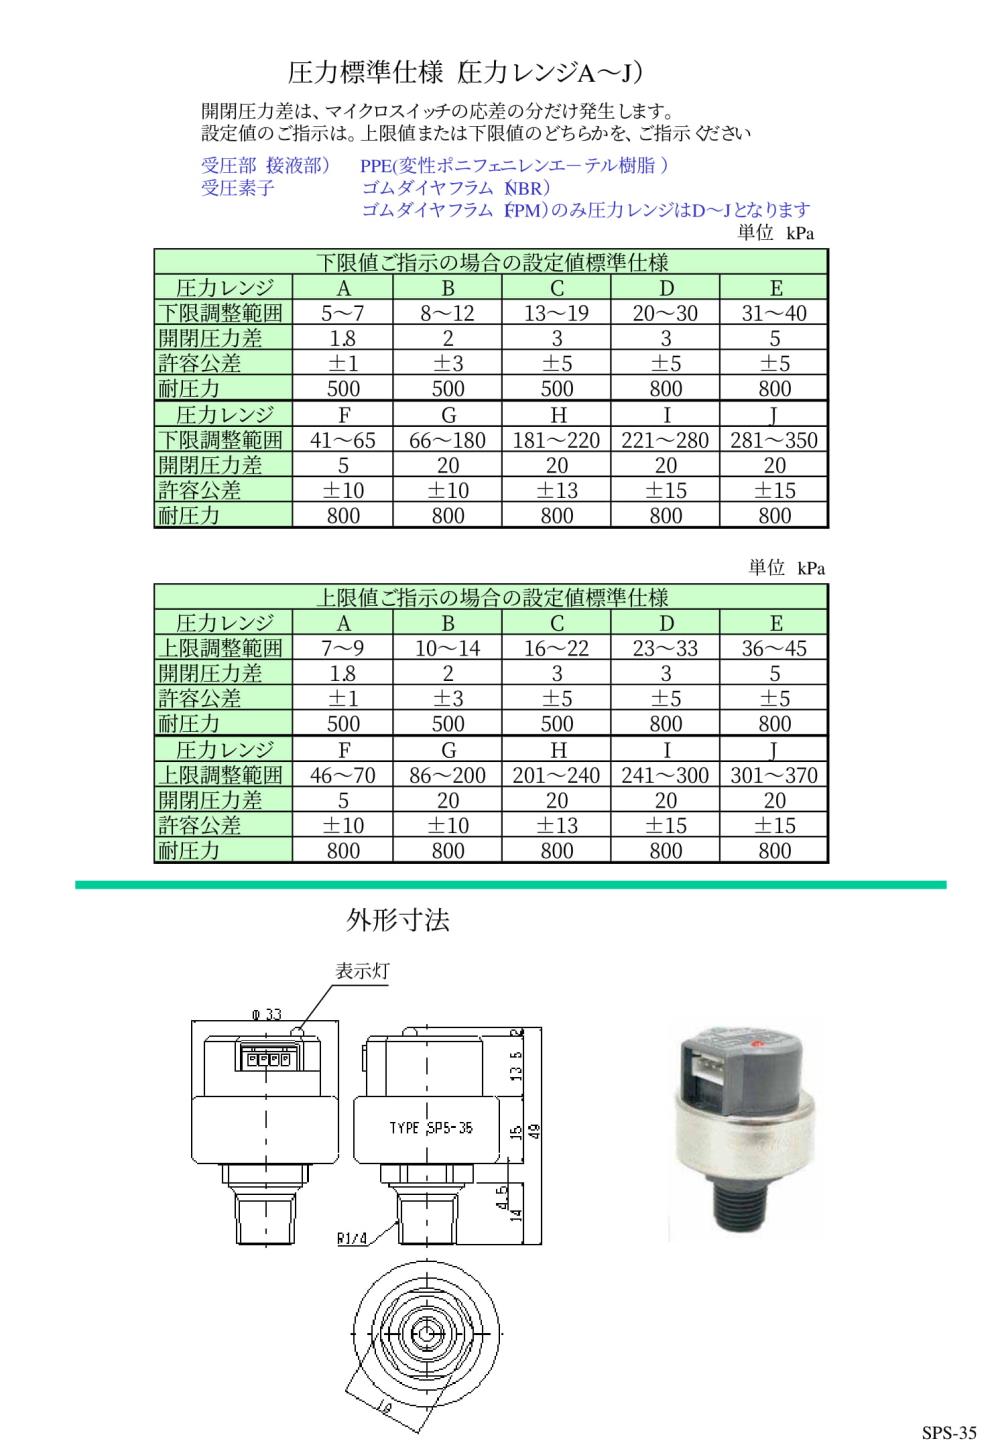 SANWA DENKI Pressure Switch SPS-35, PPE Series